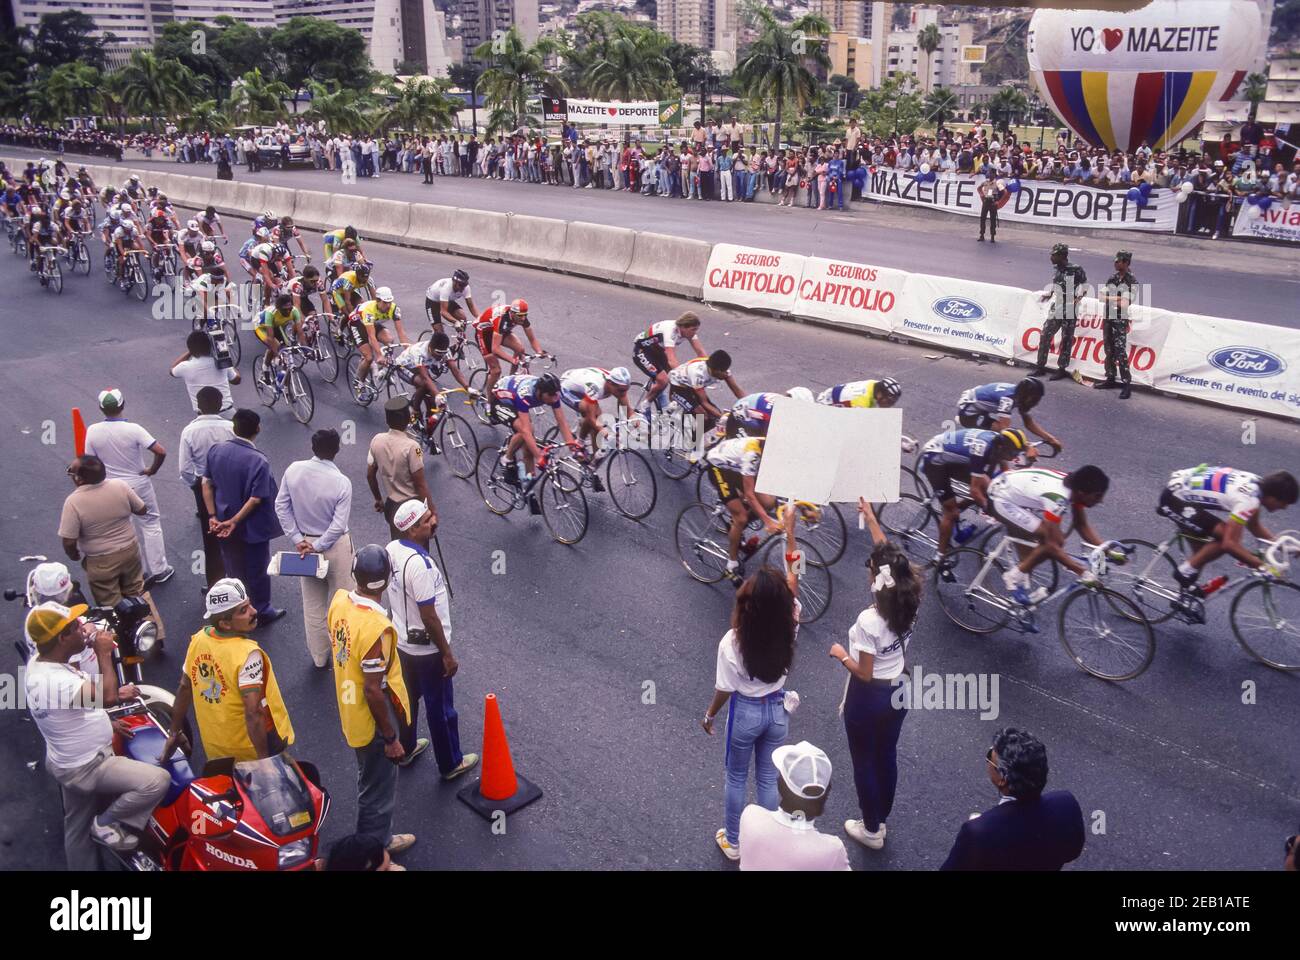 CARACAS, VENEZUELA, 1988 - Tour of the Americas bicycle race. Stock Photo